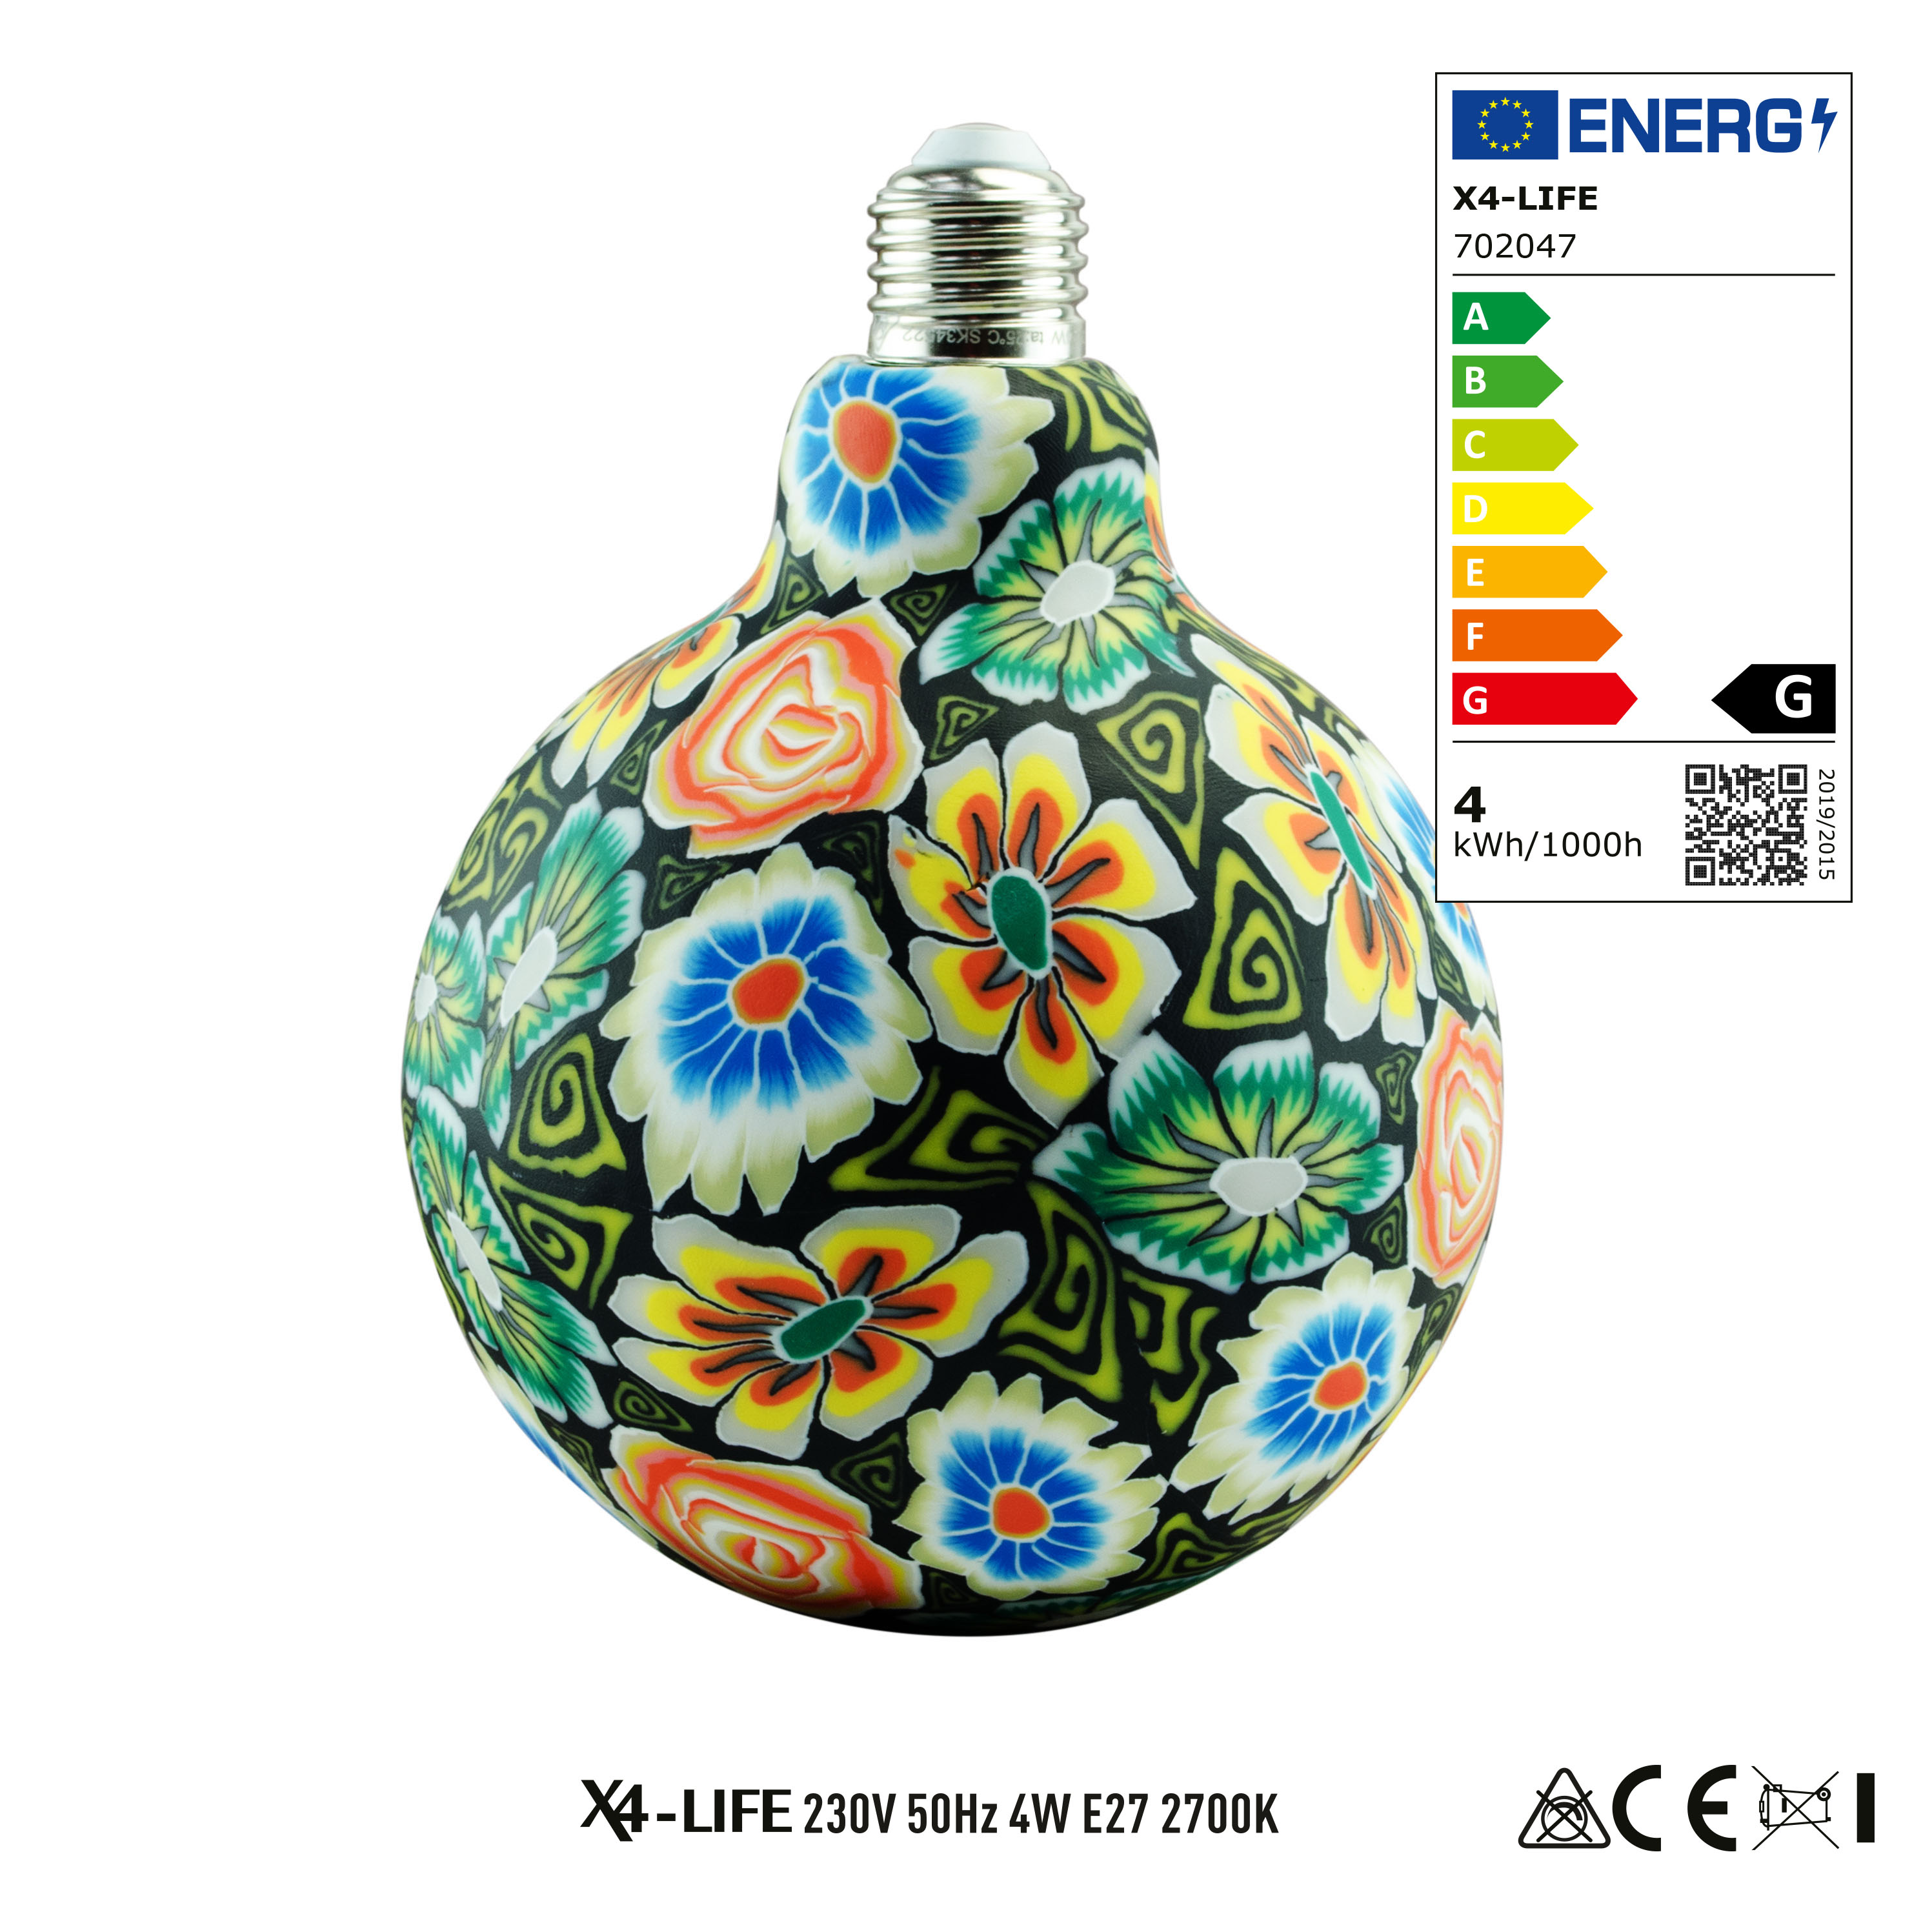 LED Porzellankugel Blumenmuster E27-Fassung 30 Lumen 4 Watt G125